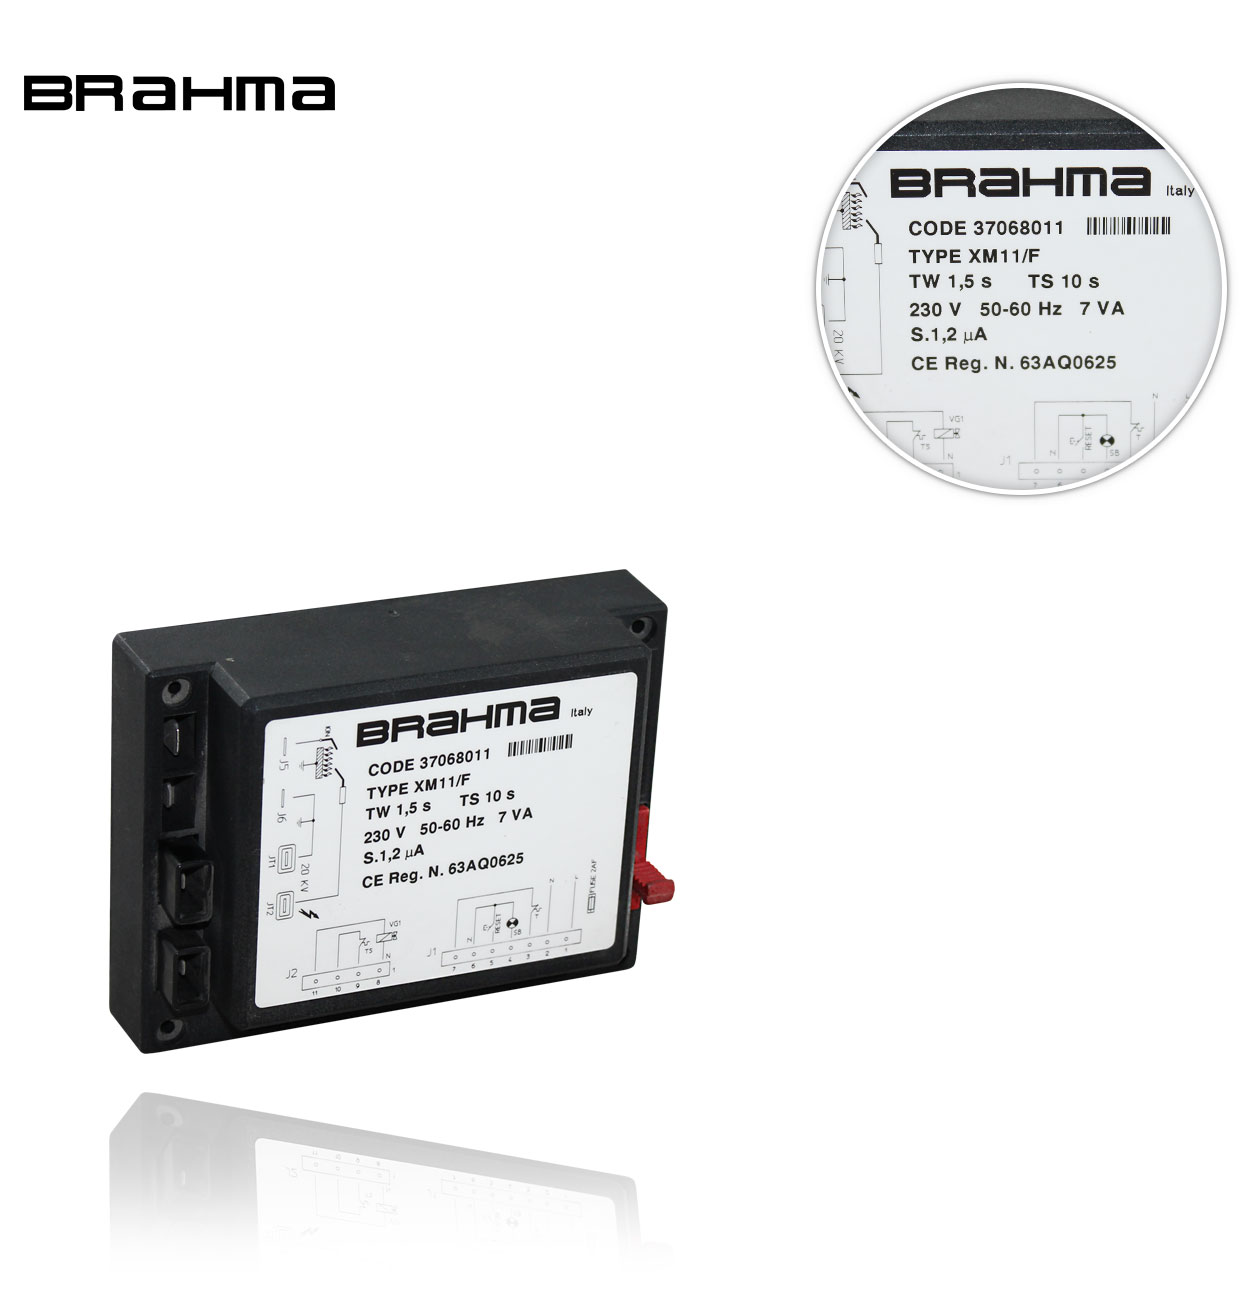 XM11/F TW1.5 TS5 230V/50-60Hz BRAHMA CONTROL BOX